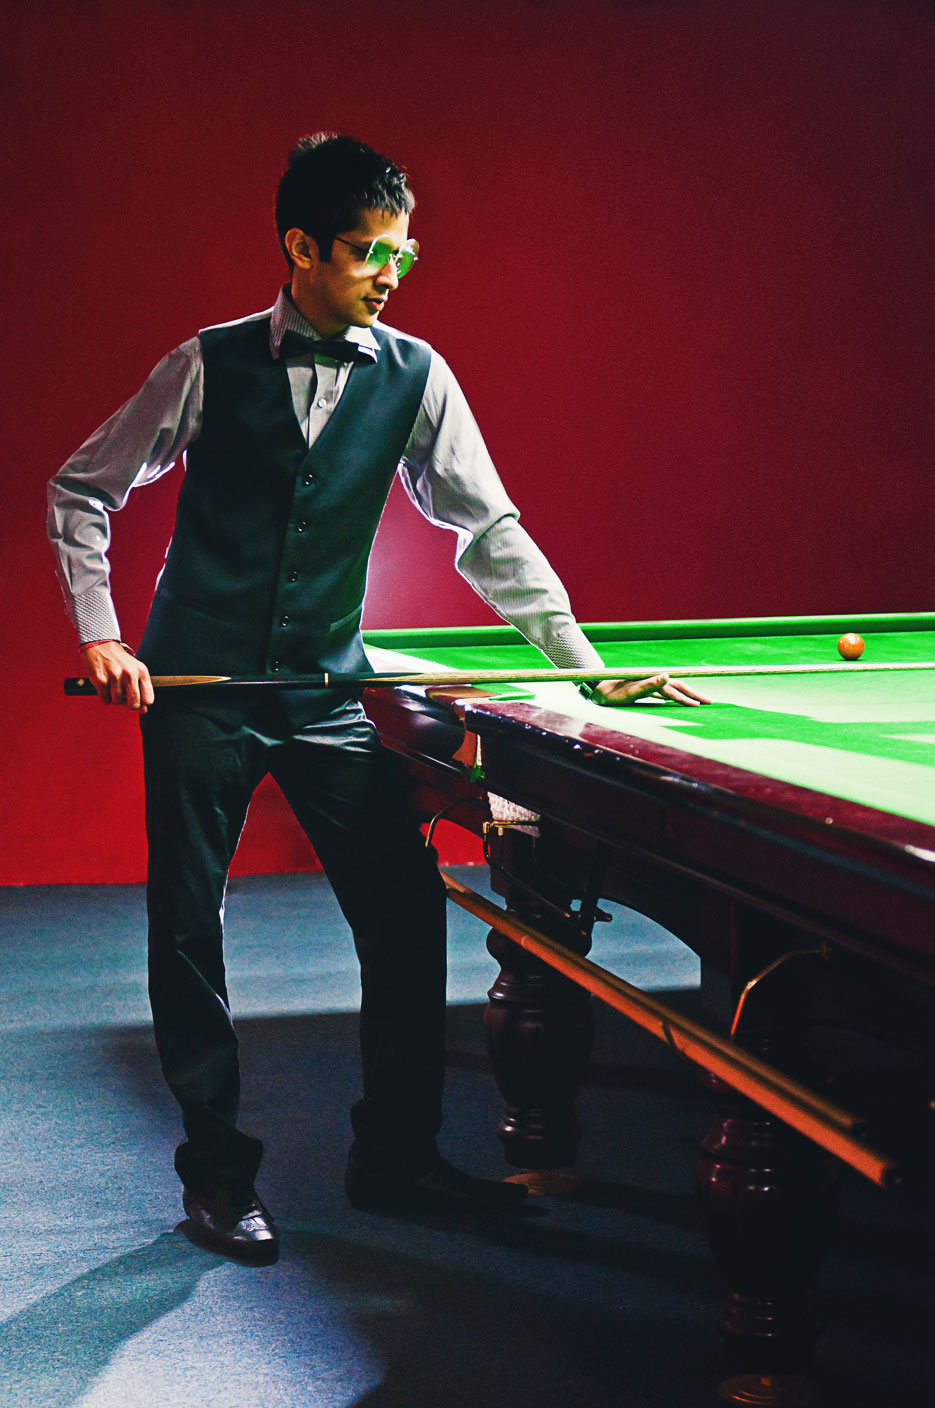 Portraits of a Snooker Player, Aman Goel. Photography by professional Indian photographer Naina Redhu of Naina.co